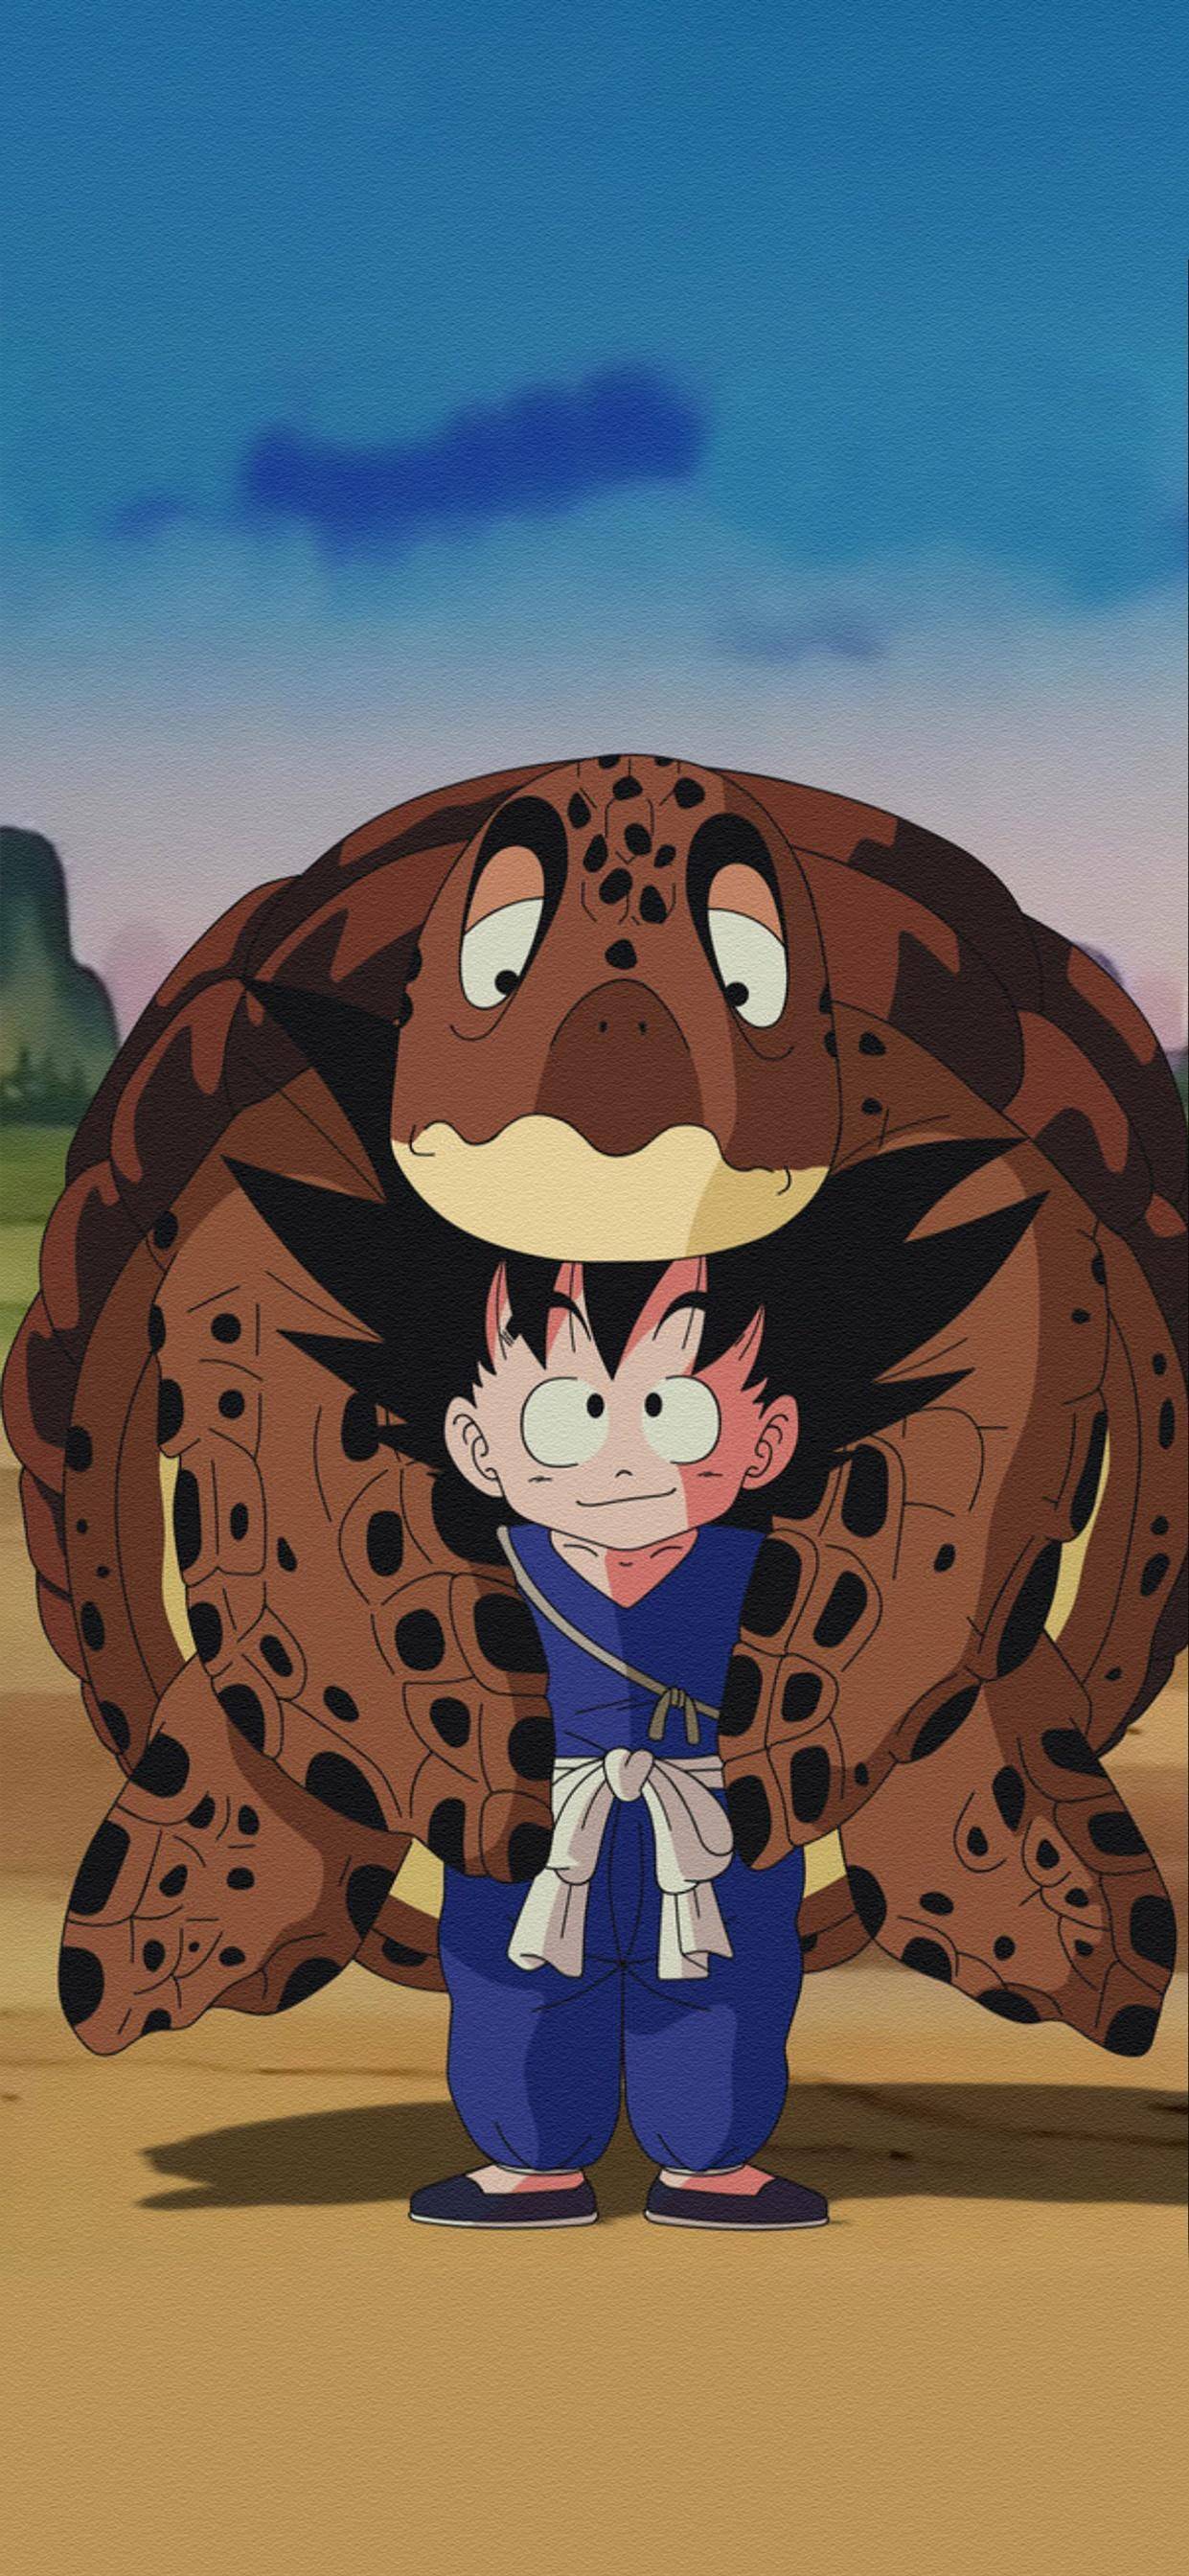  Goku Hintergrundbild 1241x2688. Oops Anime Wallpaper on X: Everyday wallpaper: Dragon ball. .. .. .. . #vegeta #goku #kakarot #dragonballz #dragonballsuper #dragonball #dbz #dbs #db #aesthetic #aestheticedits #aesthetics #aestheticedit #aestheticphotos #heartthrob #